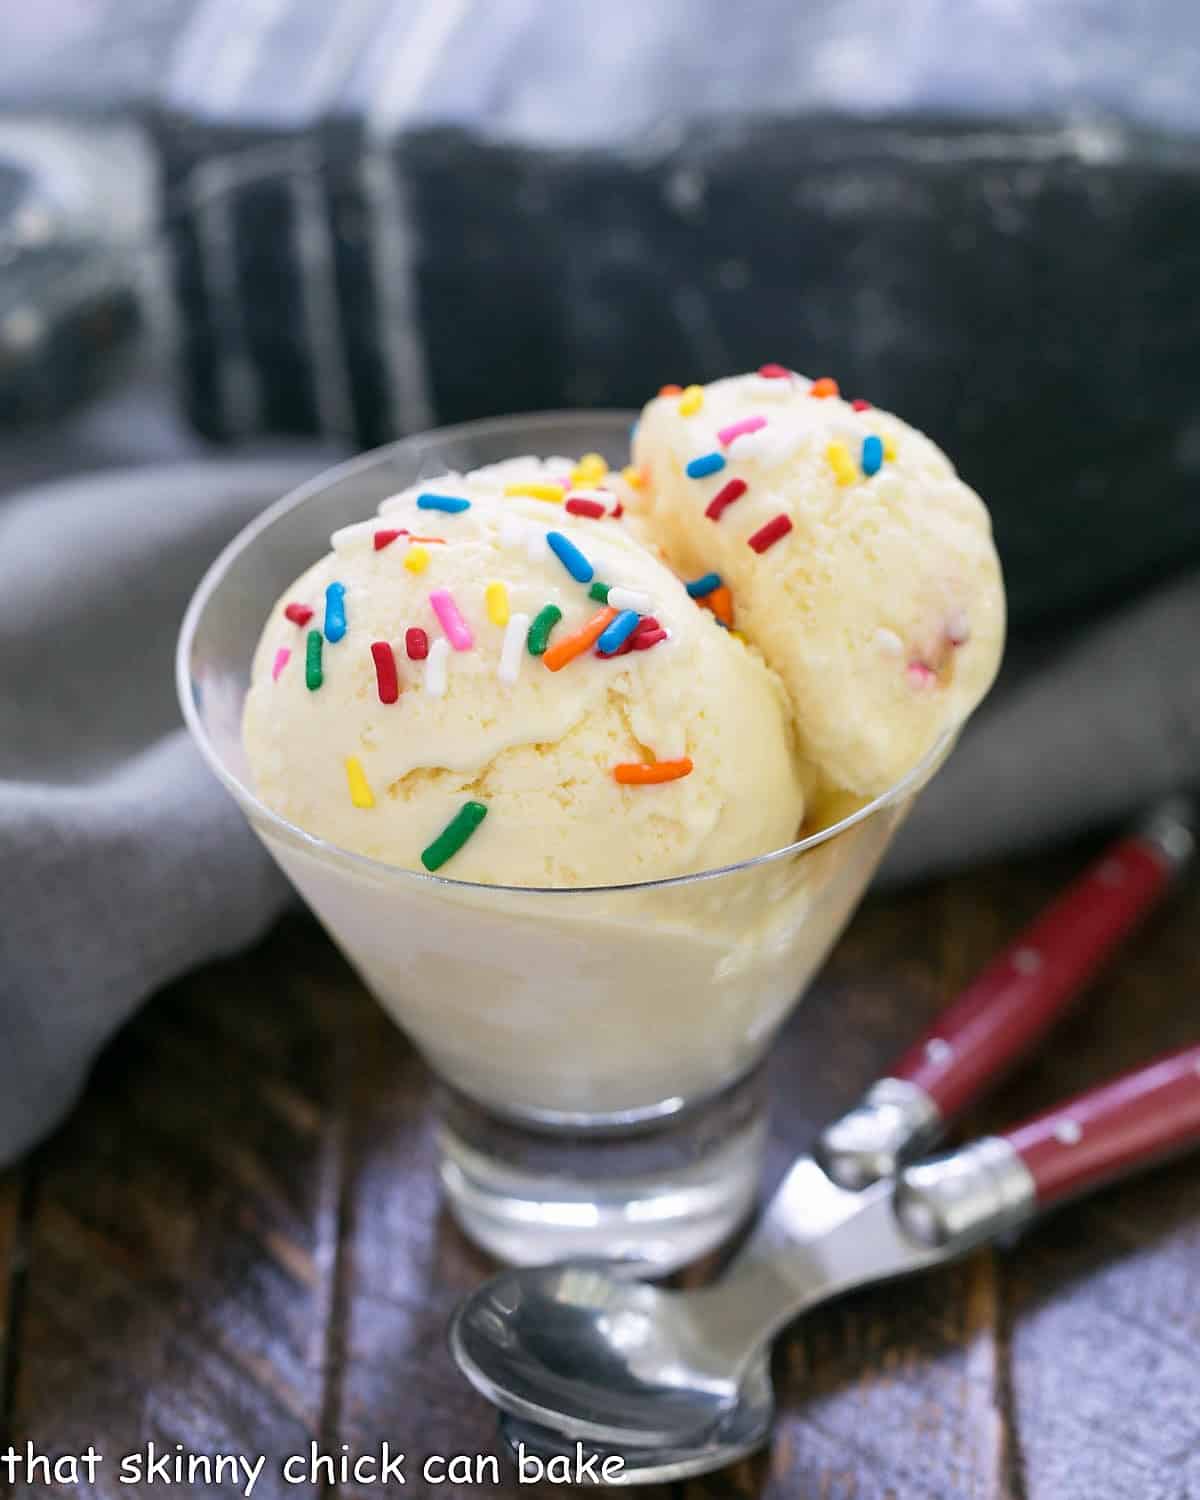 https://www.thatskinnychickcanbake.com/wp-content/uploads/2013/08/Cake-Batter-Ice-Cream-7.jpg